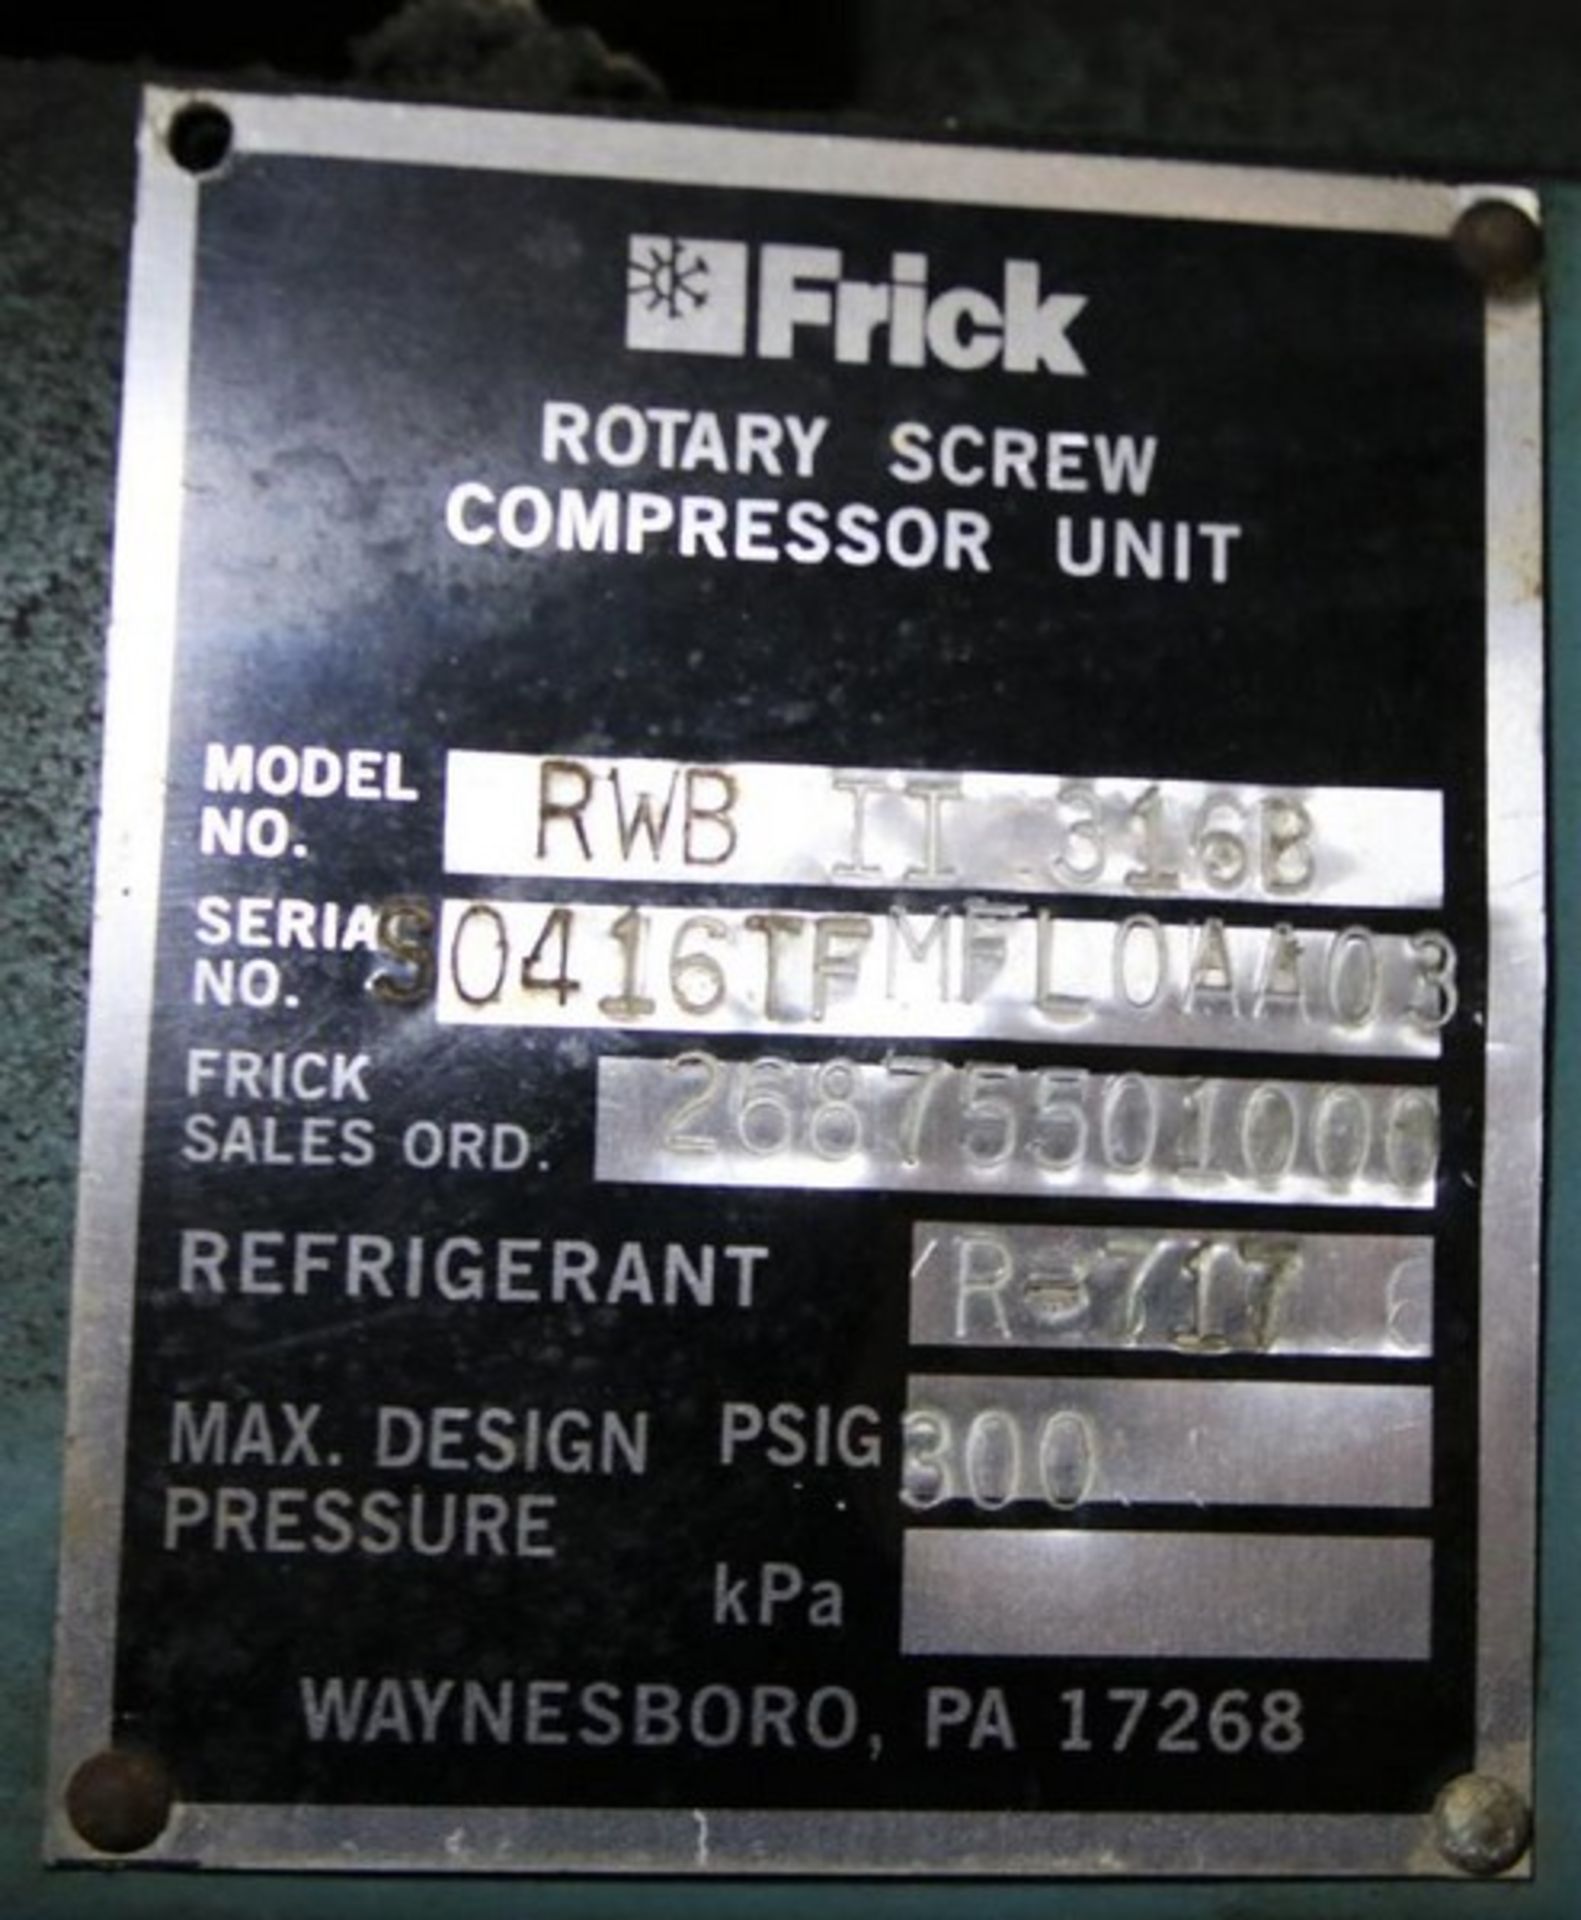 1998 Frick hp 250 hp Screw Ammonia Compressor, Frame Model RWBII316B, SN S0416TFMFL0AA03, Screw Head - Image 8 of 11